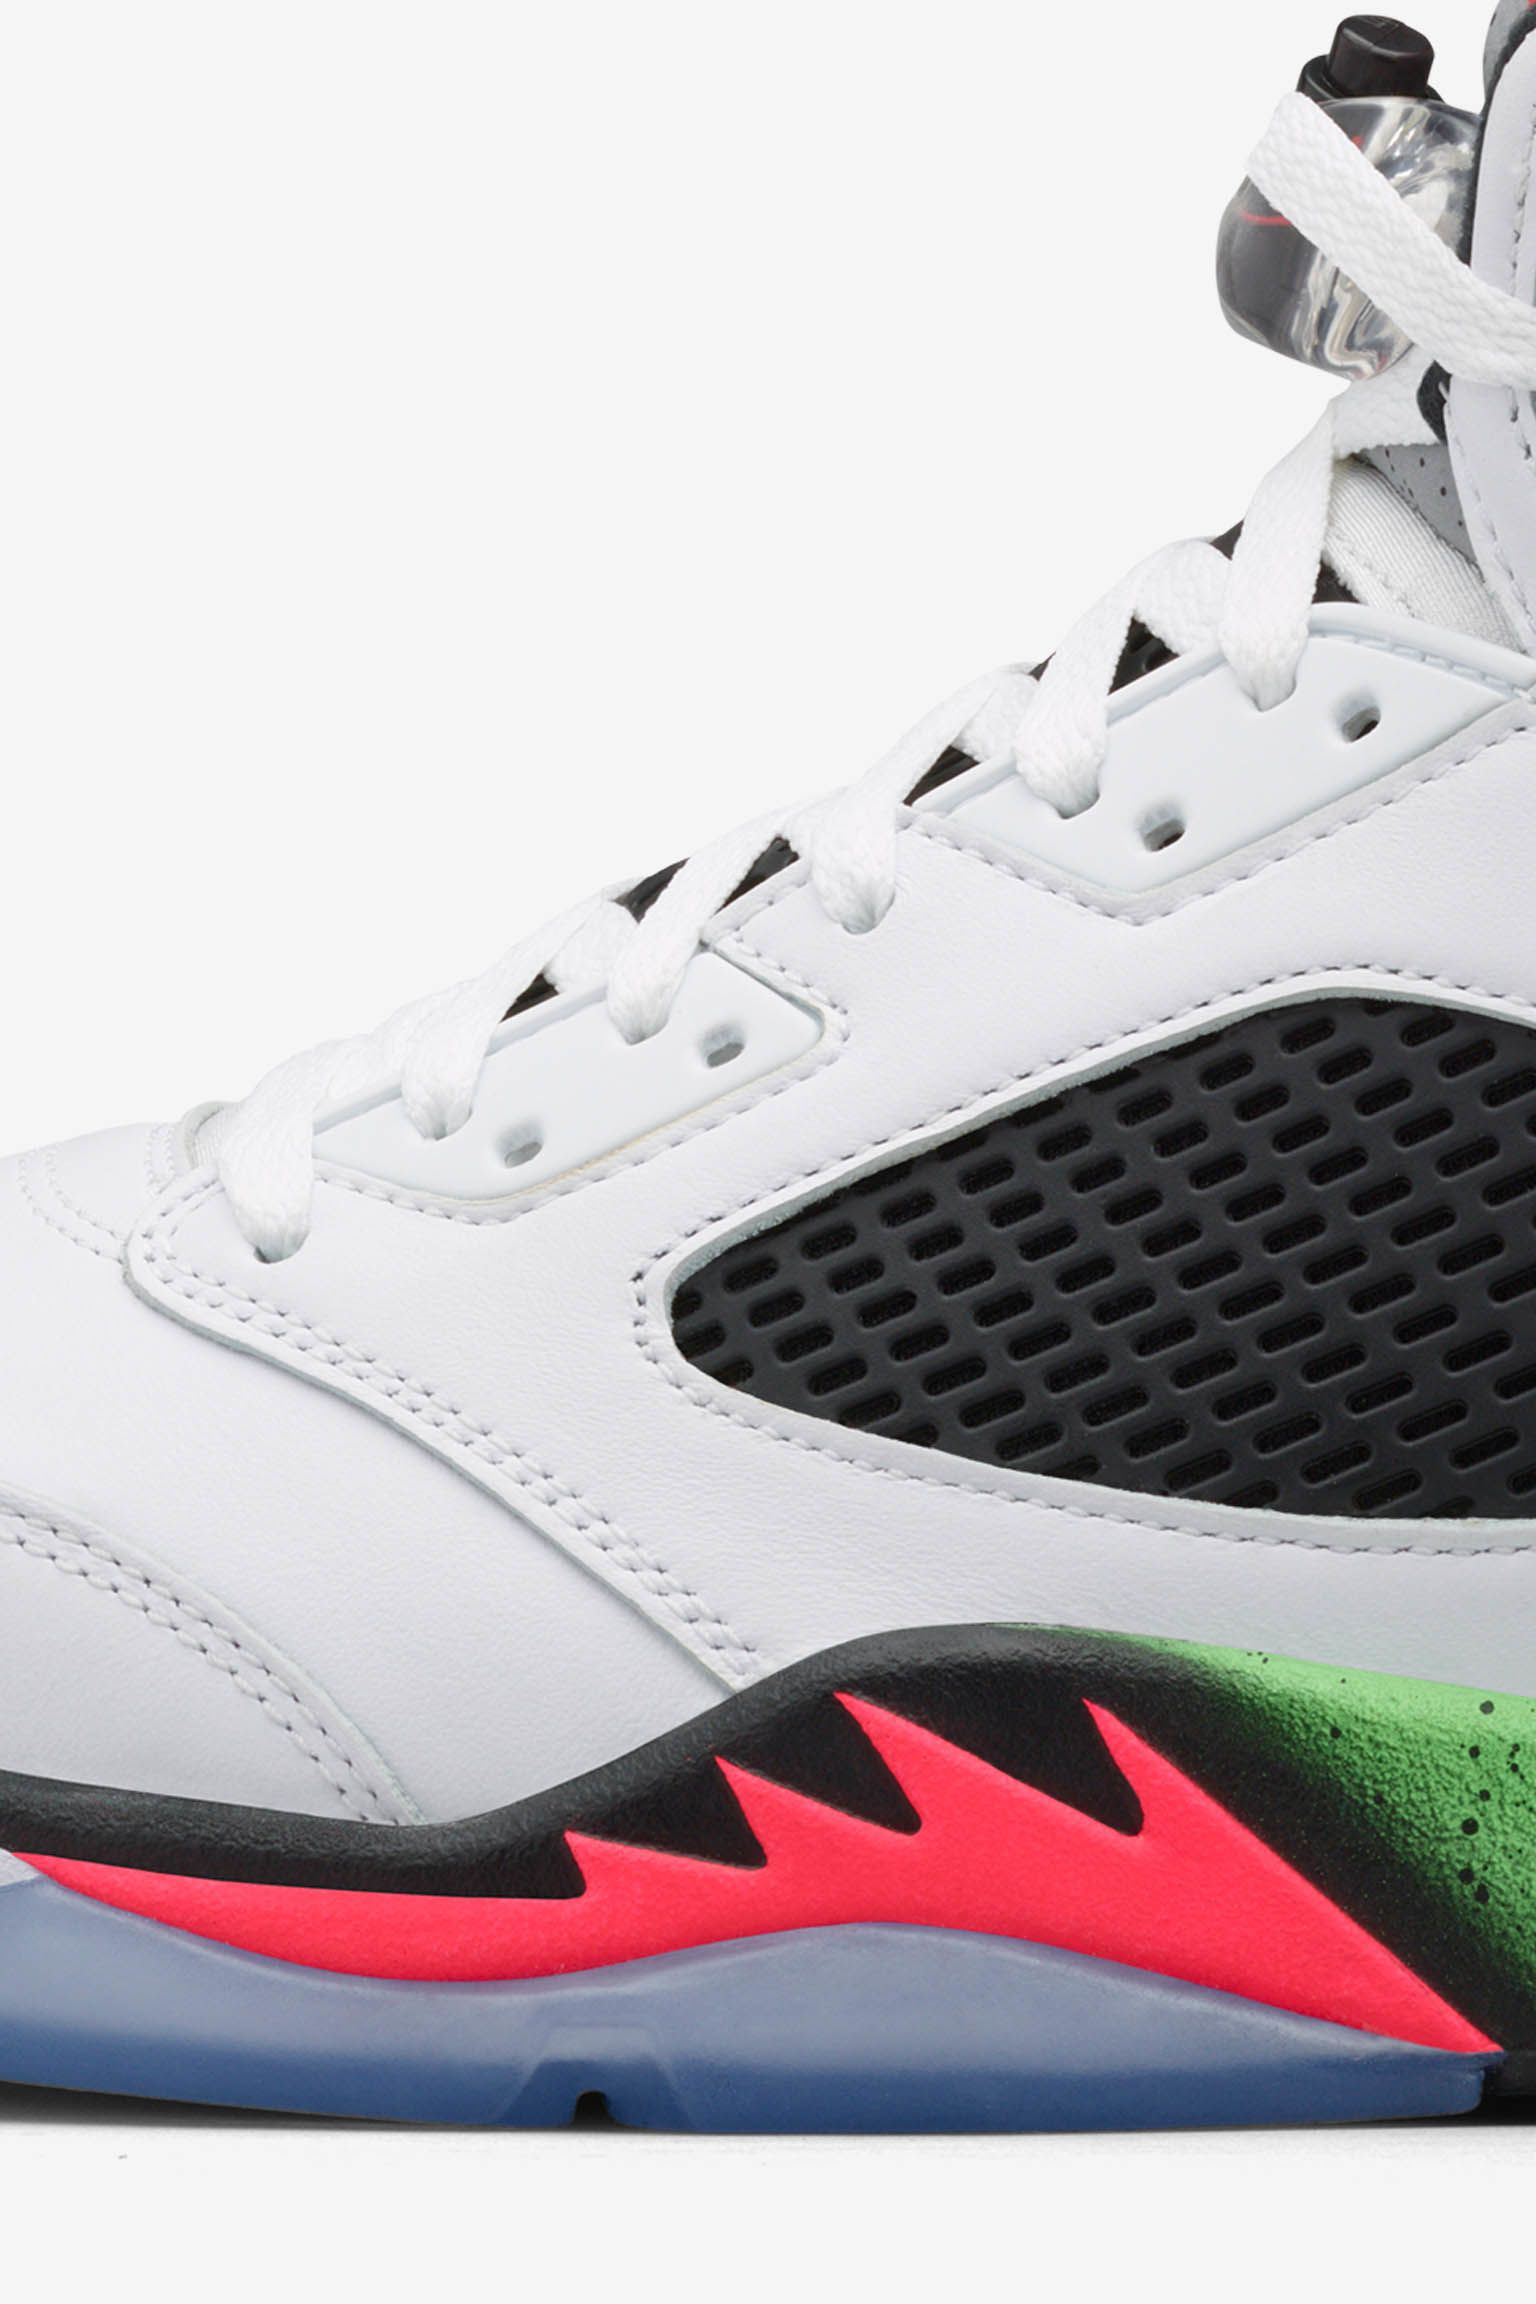 Air Jordan 5 Retro 'Poison Green' Release Date. Nike SNKRS